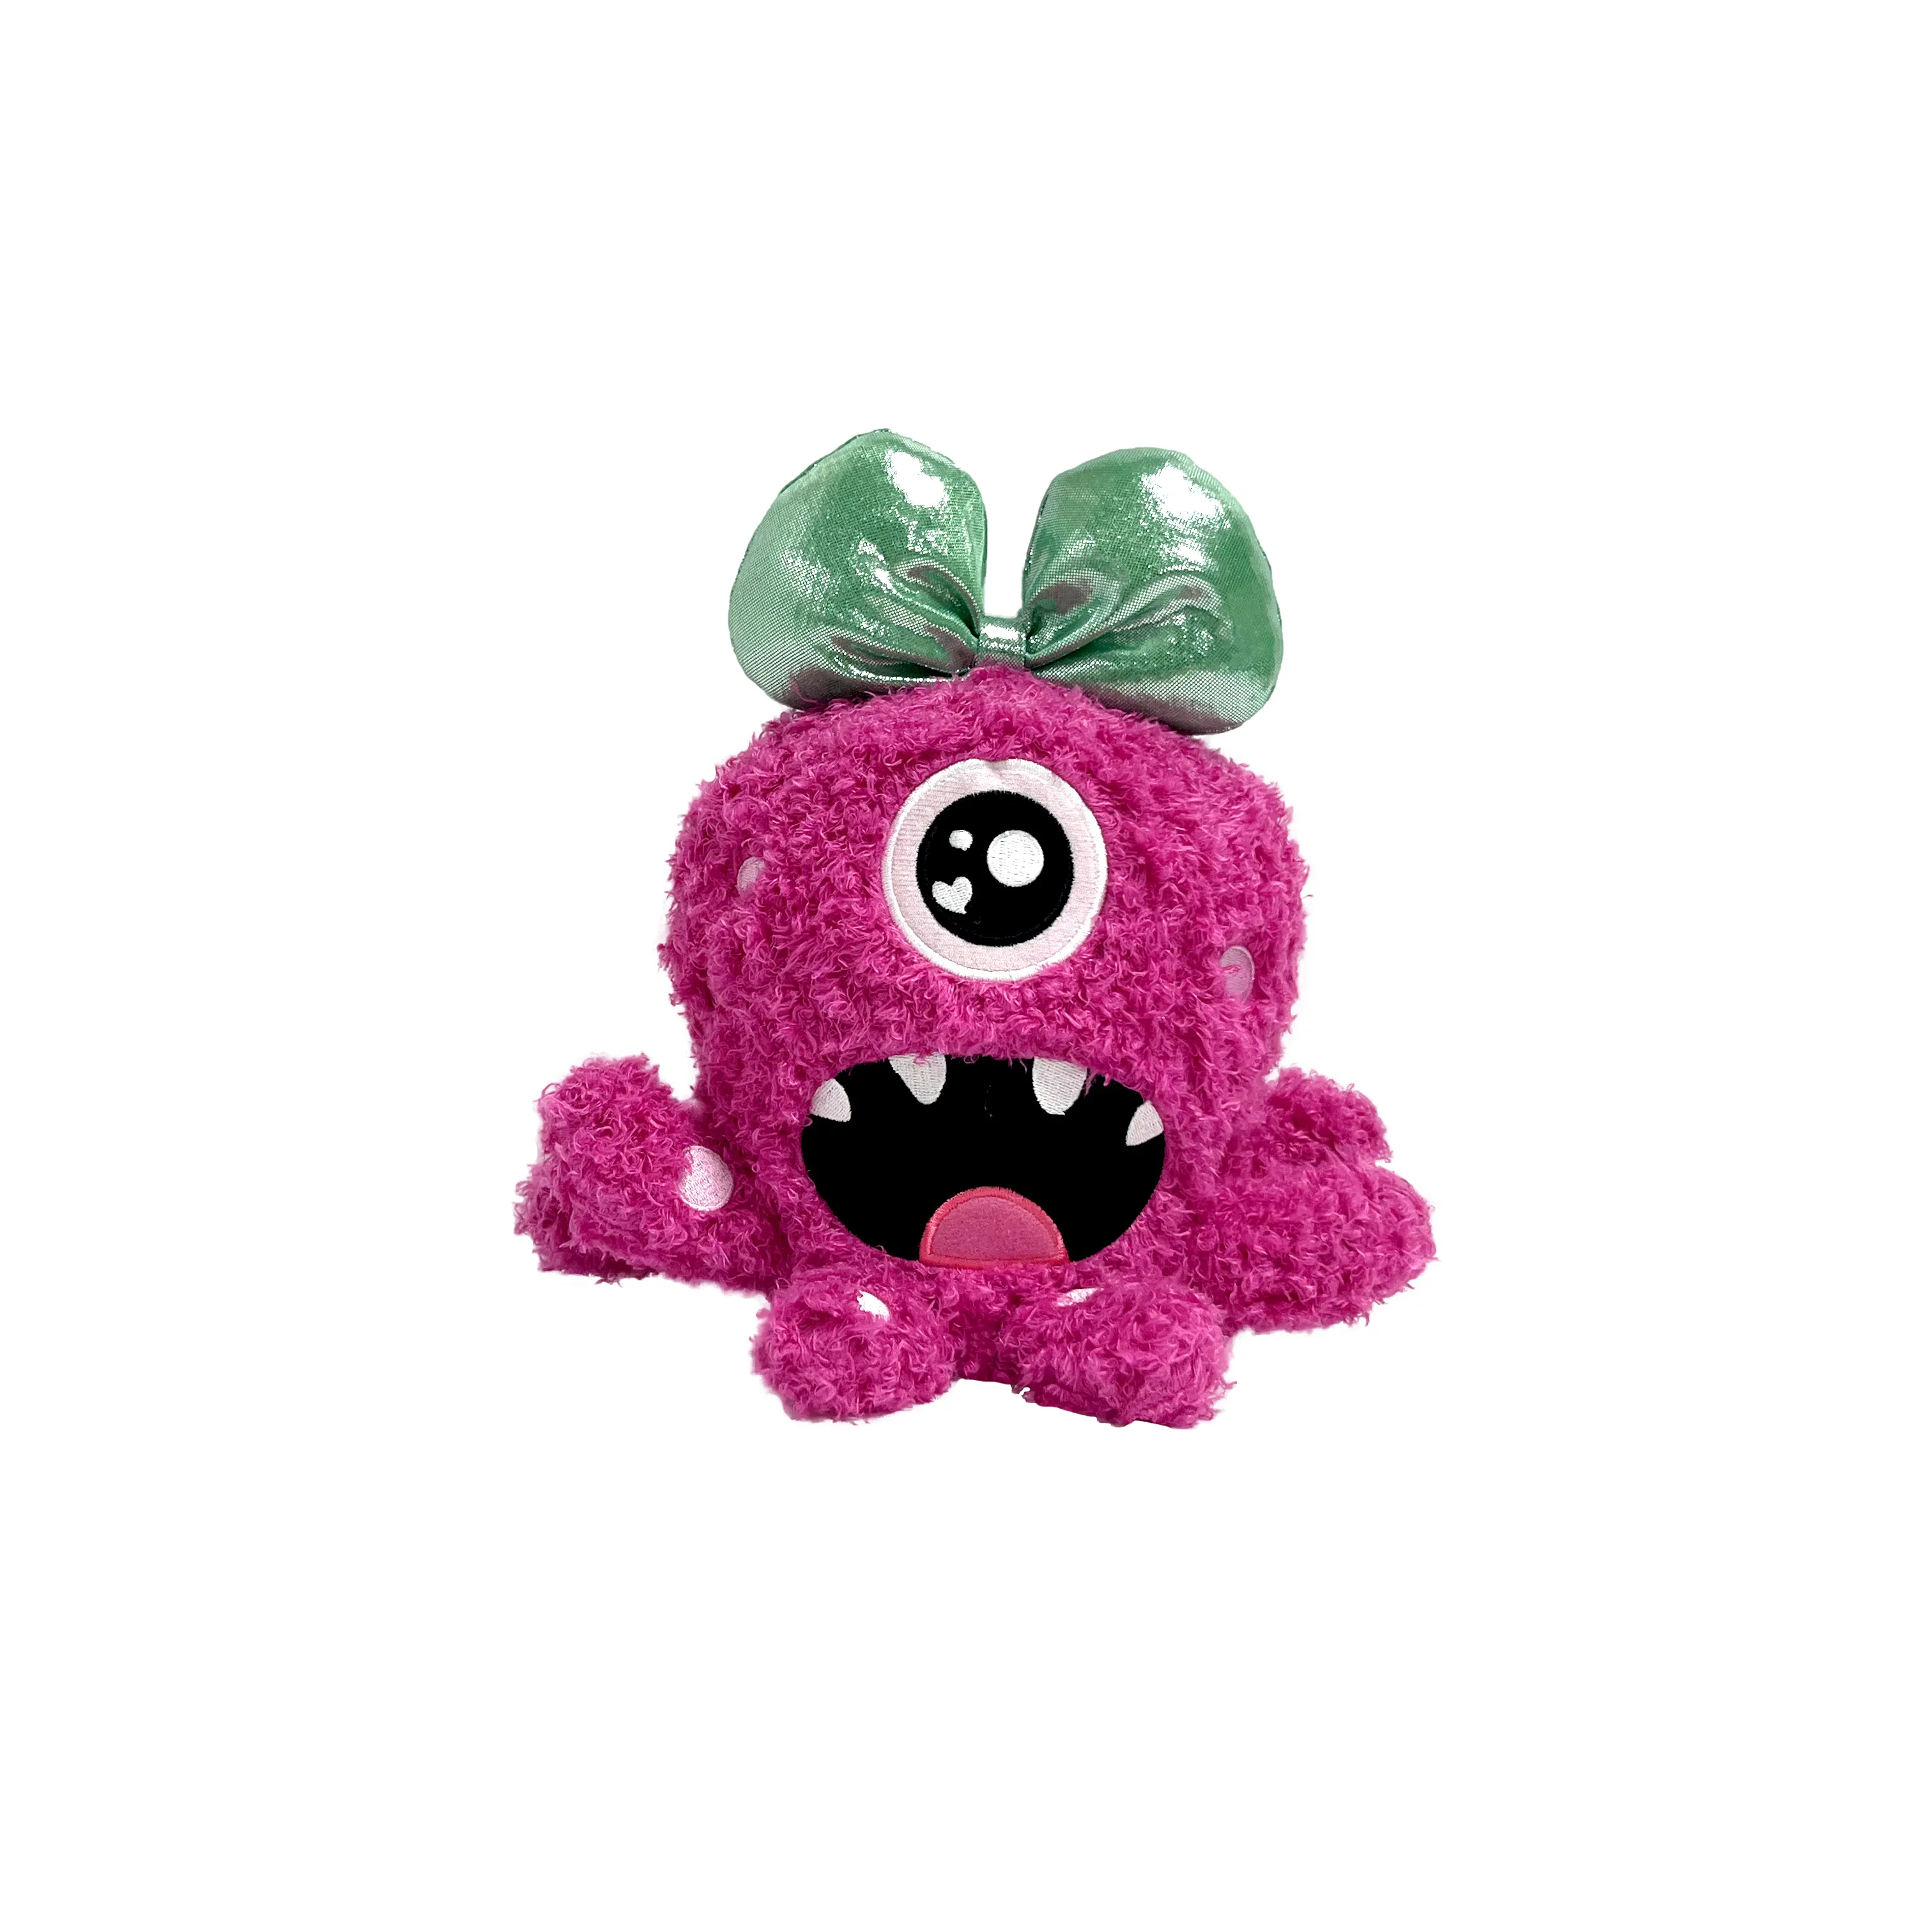 ODM निर्माता अनुकूलित भरवां पशु आलीशान रंगीन राक्षस सभी सेंटस डे के लिए खिलौने उपहार